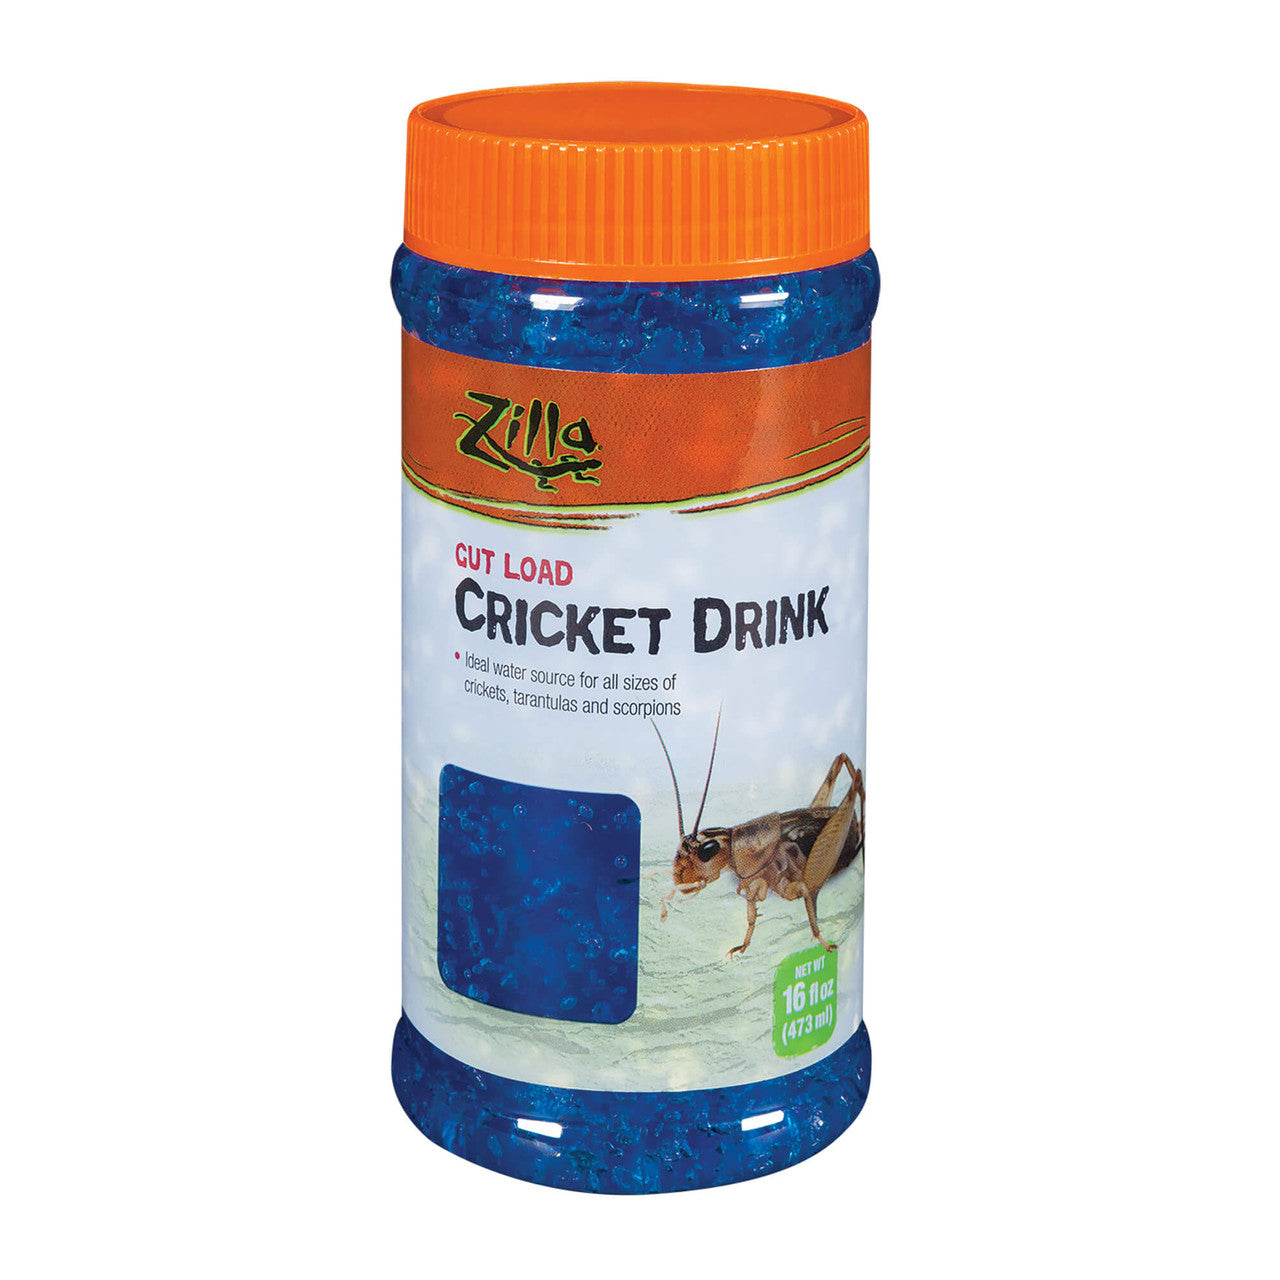 Zilla Gut Load Cricket Drink 16 Fluid Ounces